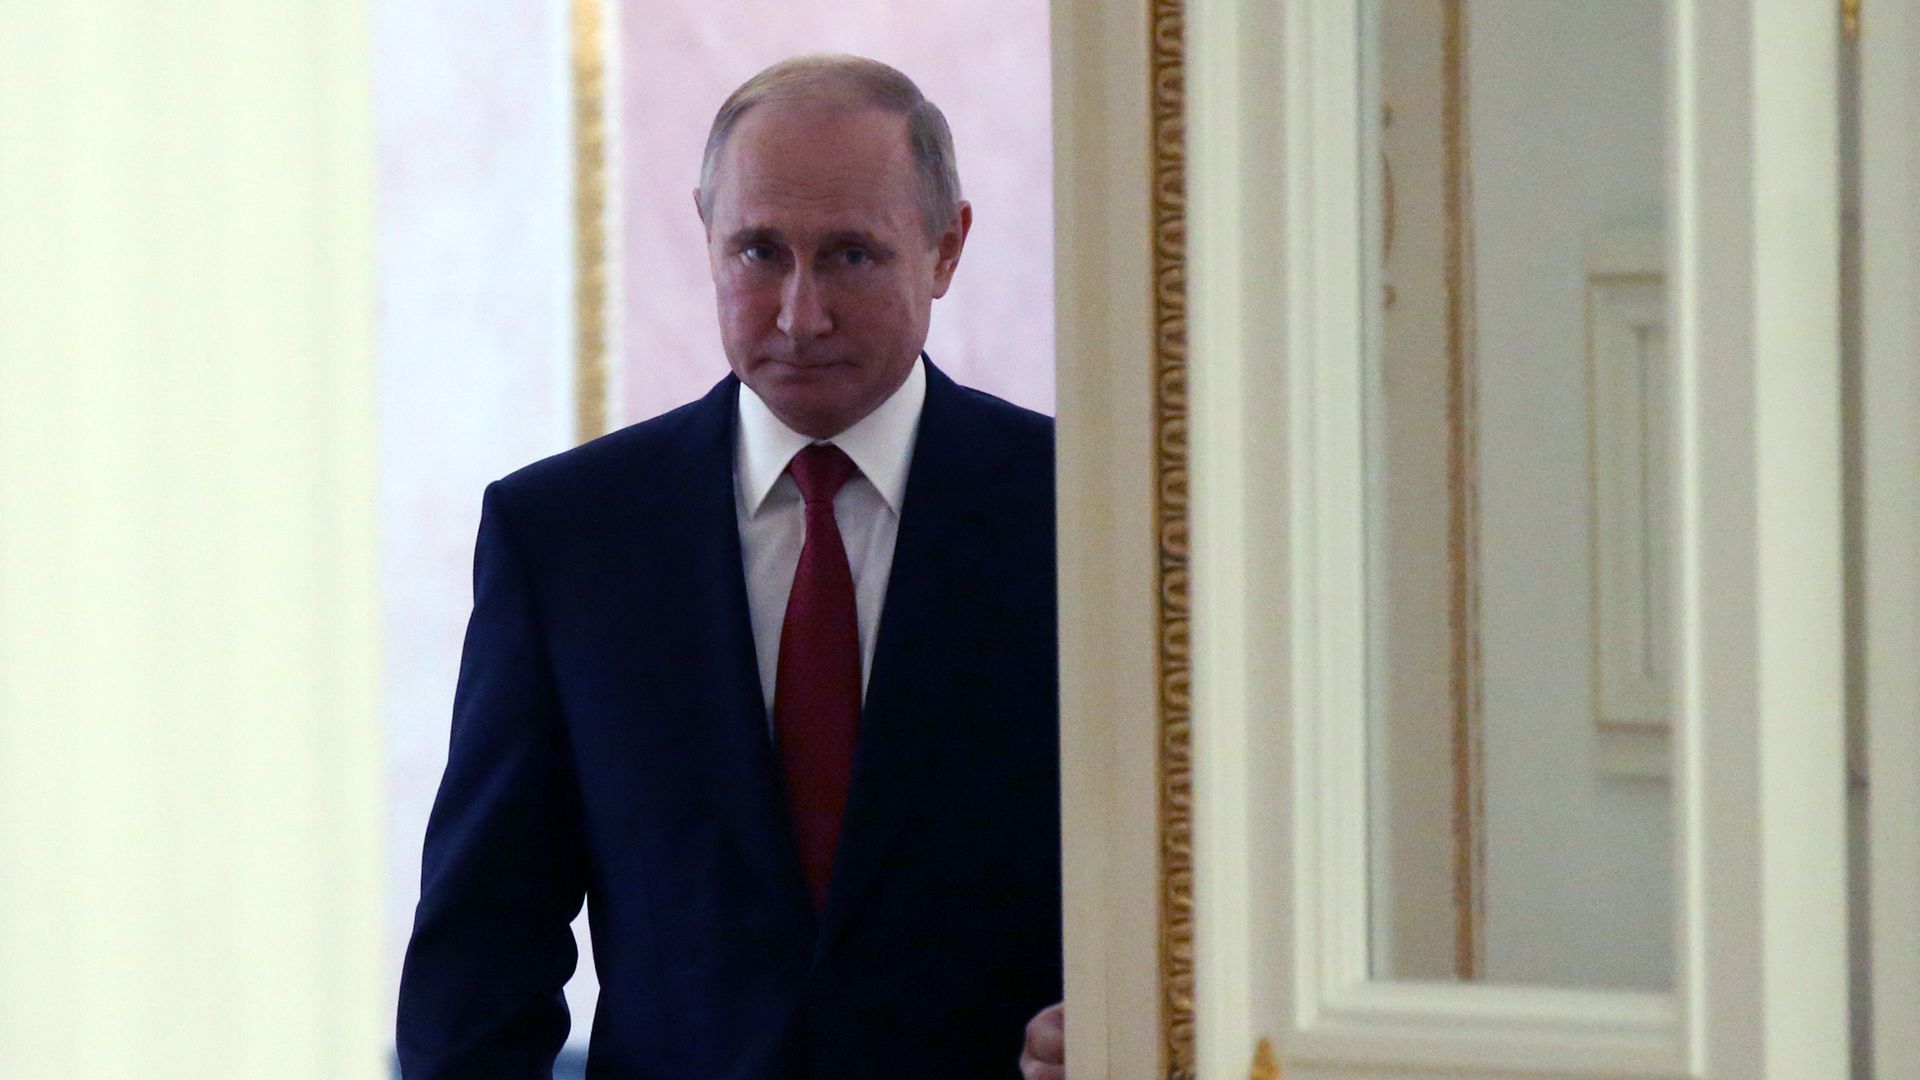 Vladimir Putin stands near a door and looks meek.